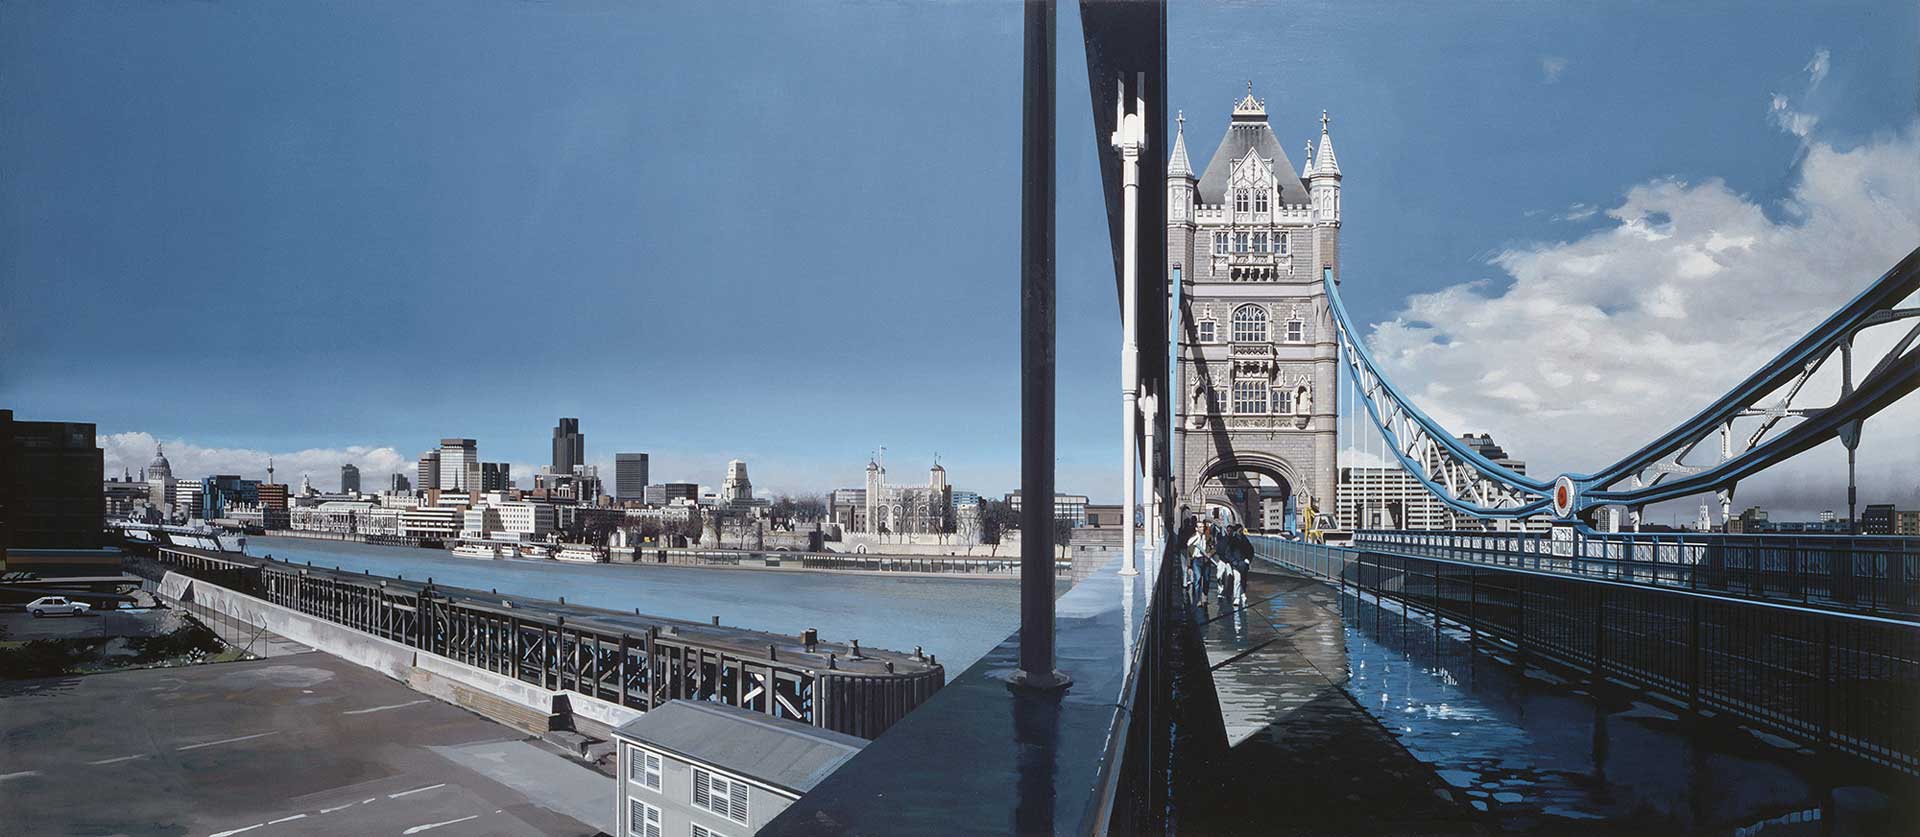 Tower bridge London,1989